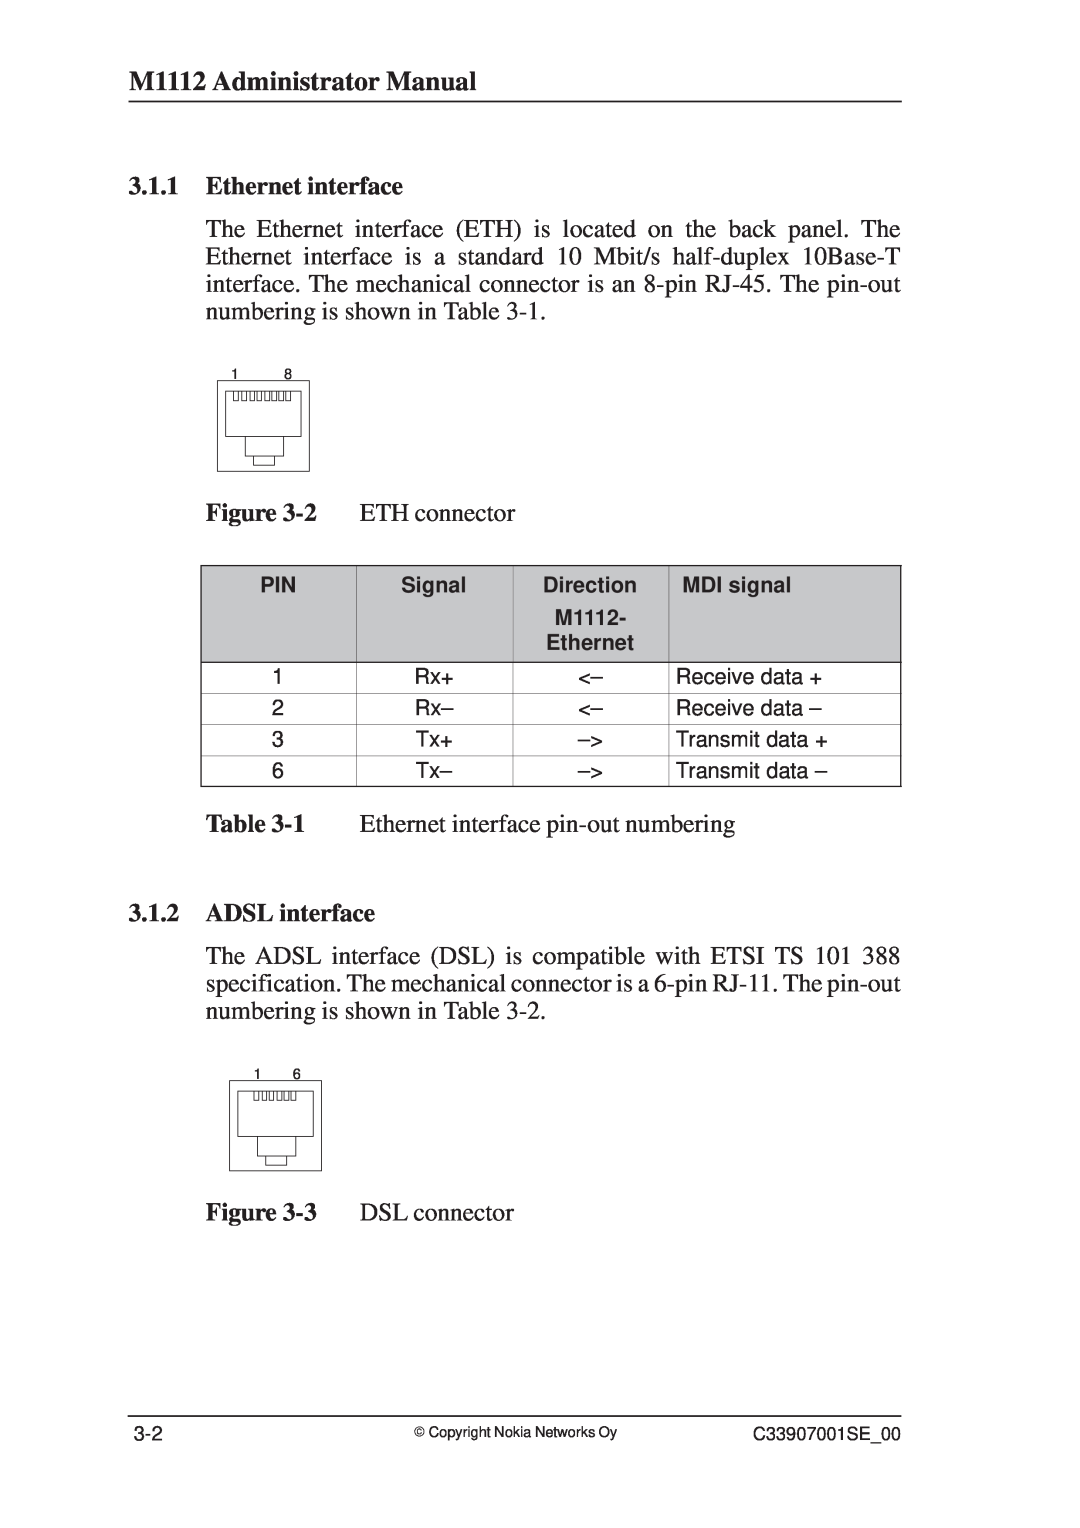 Nokia manual M1112 Administrator Manual, Ethernet interface, ADSL interface 